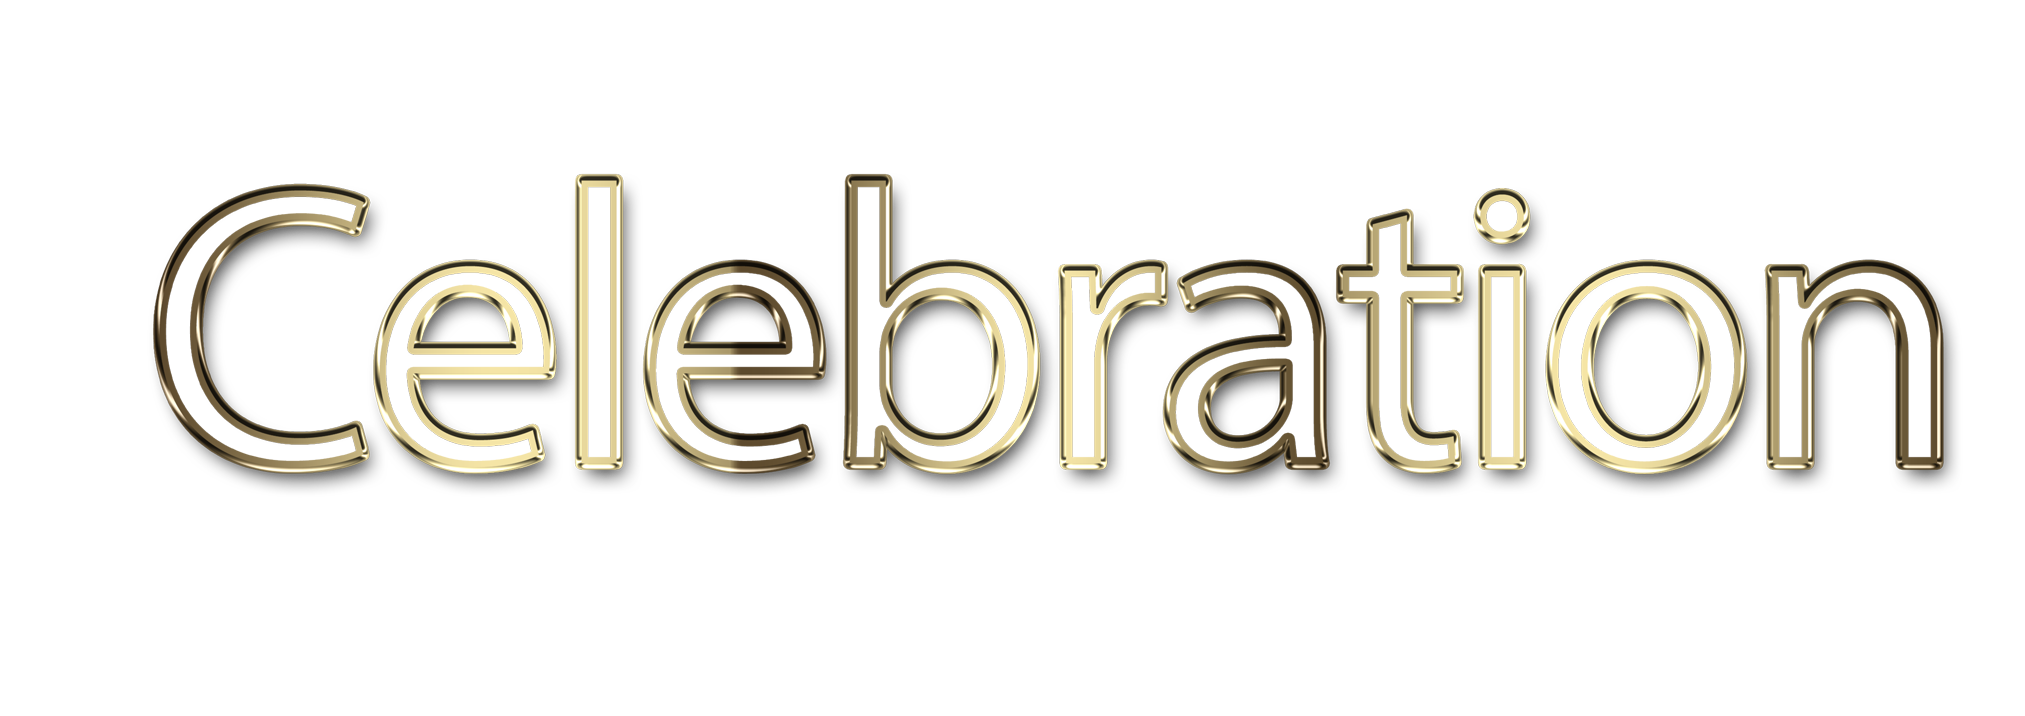 Celebration png, word Celebration png, Celebration word png, Celebration text png, Celebration letters png, Celebration word art typography PNG images, transparent png